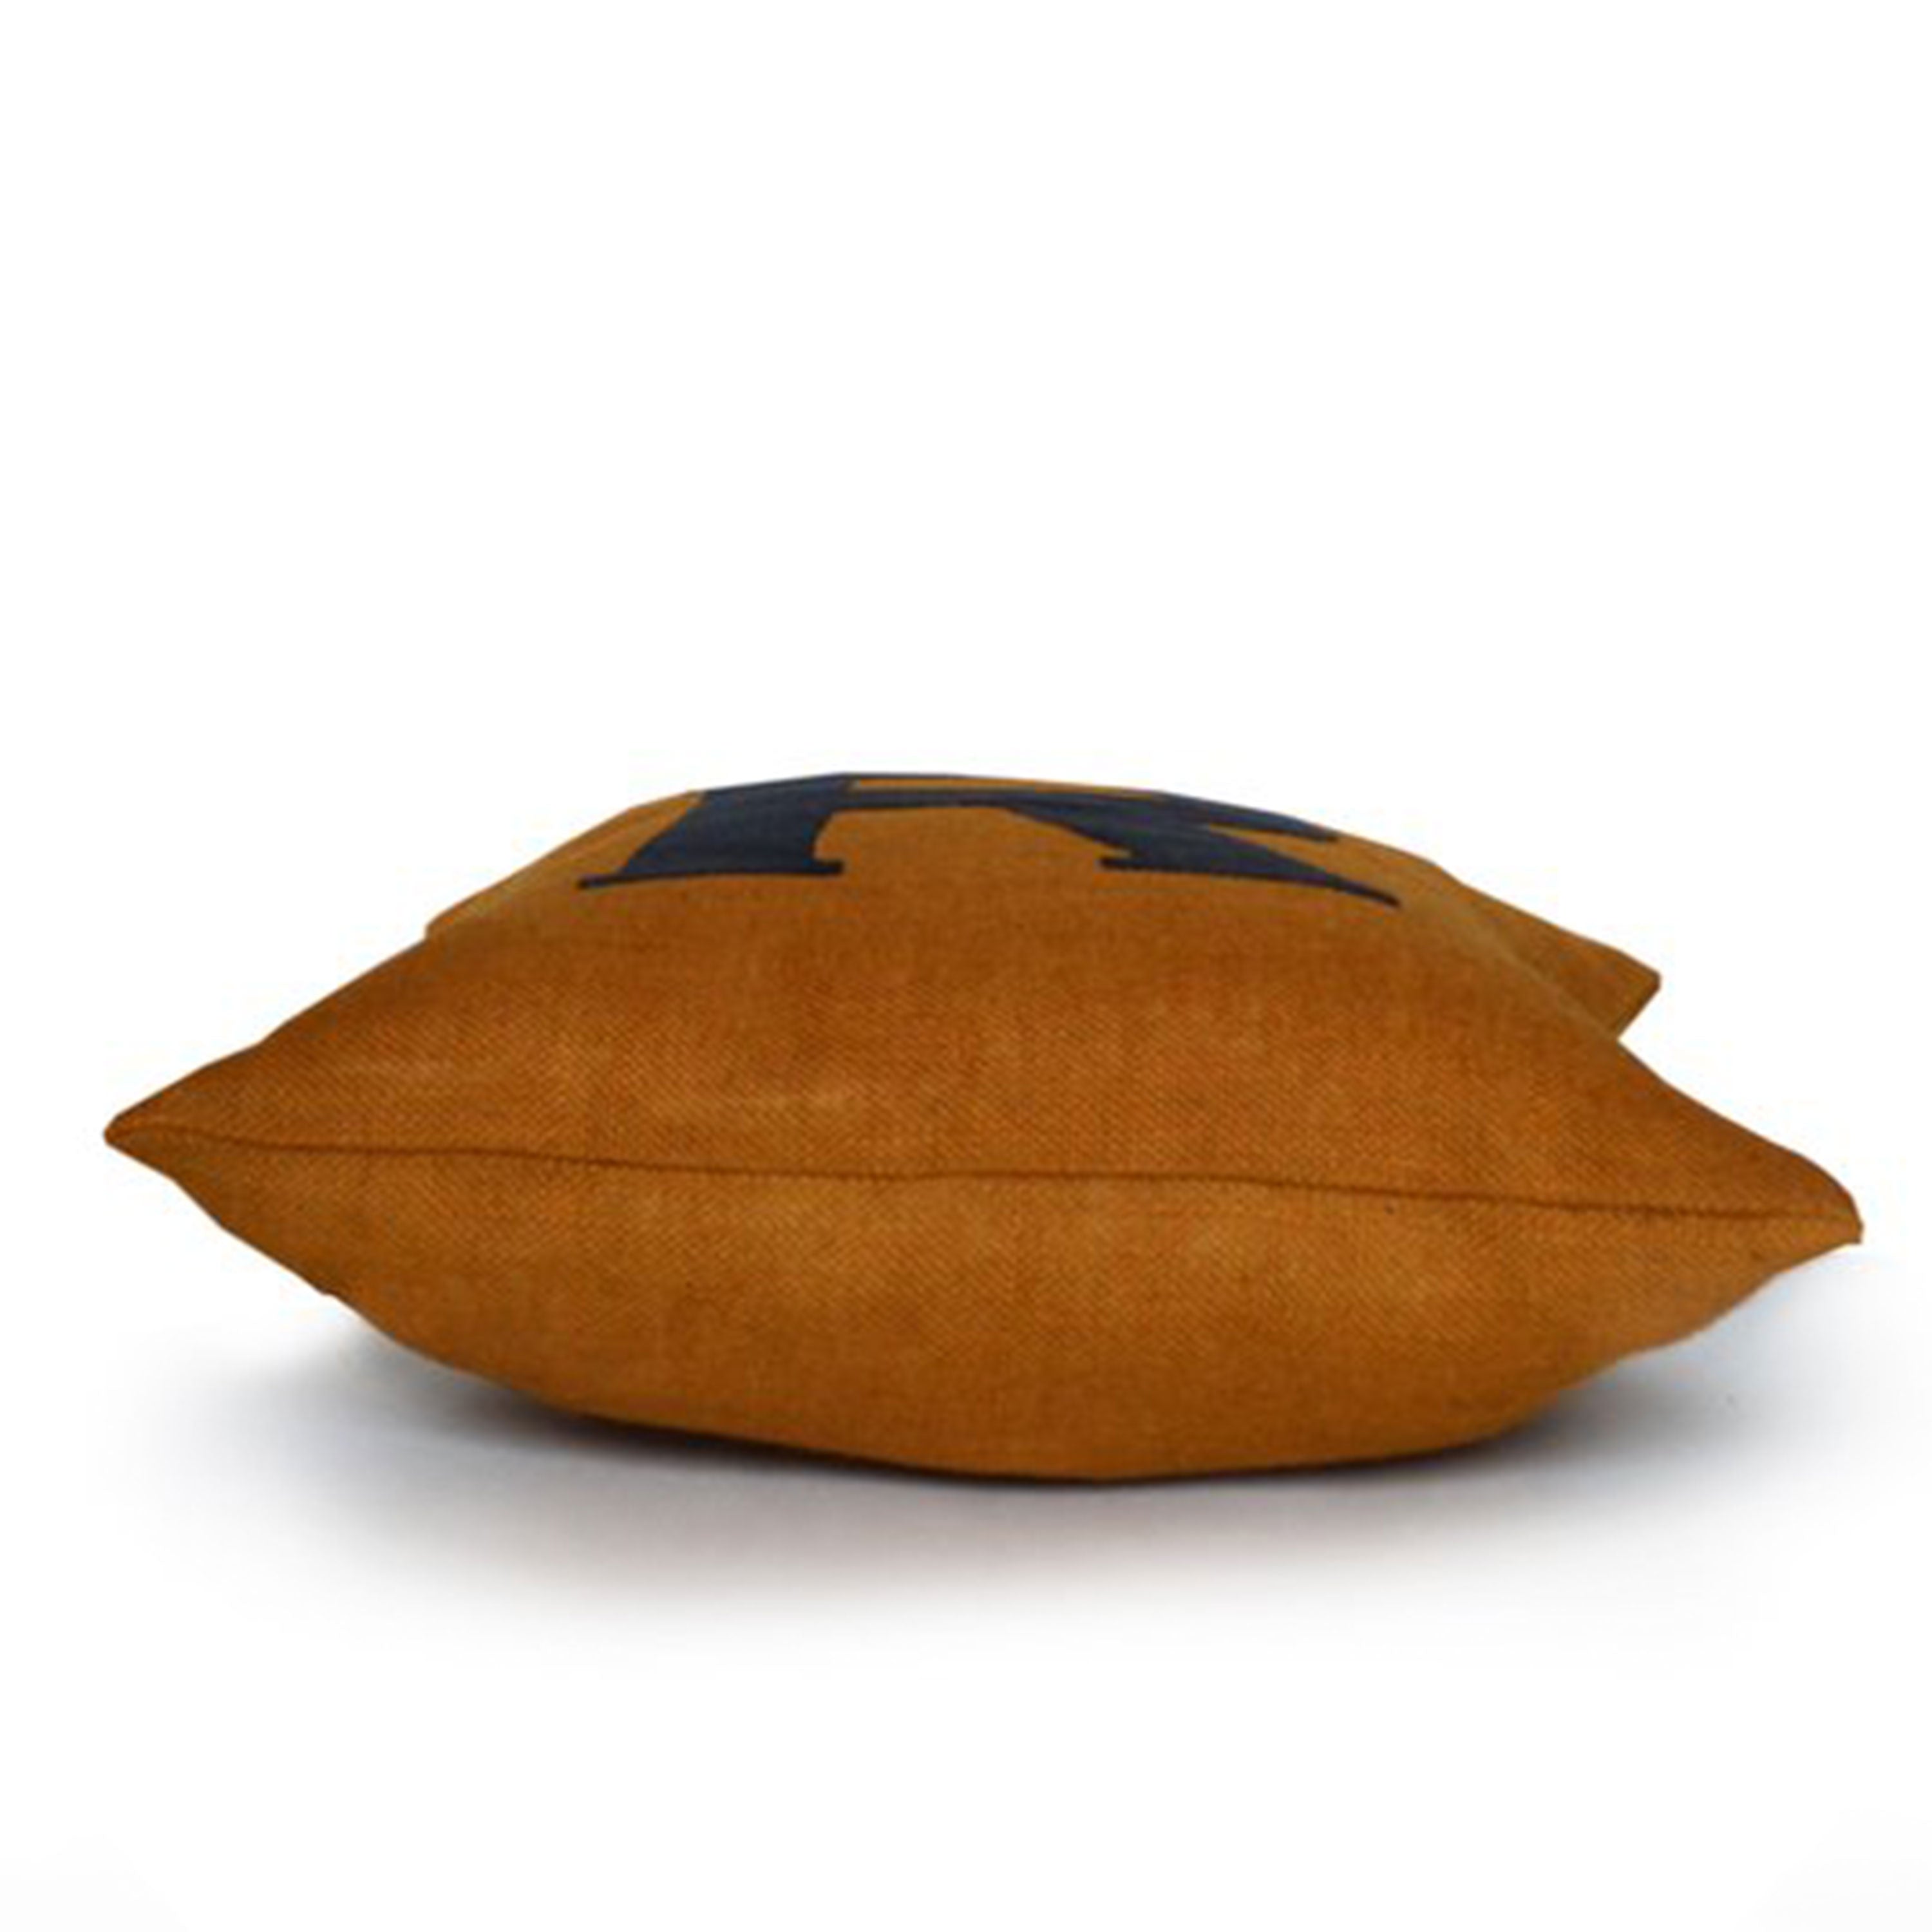 Monogram Pillows, Burlap Throw Pillow, Custom Letter Pillows,Decorative pillow